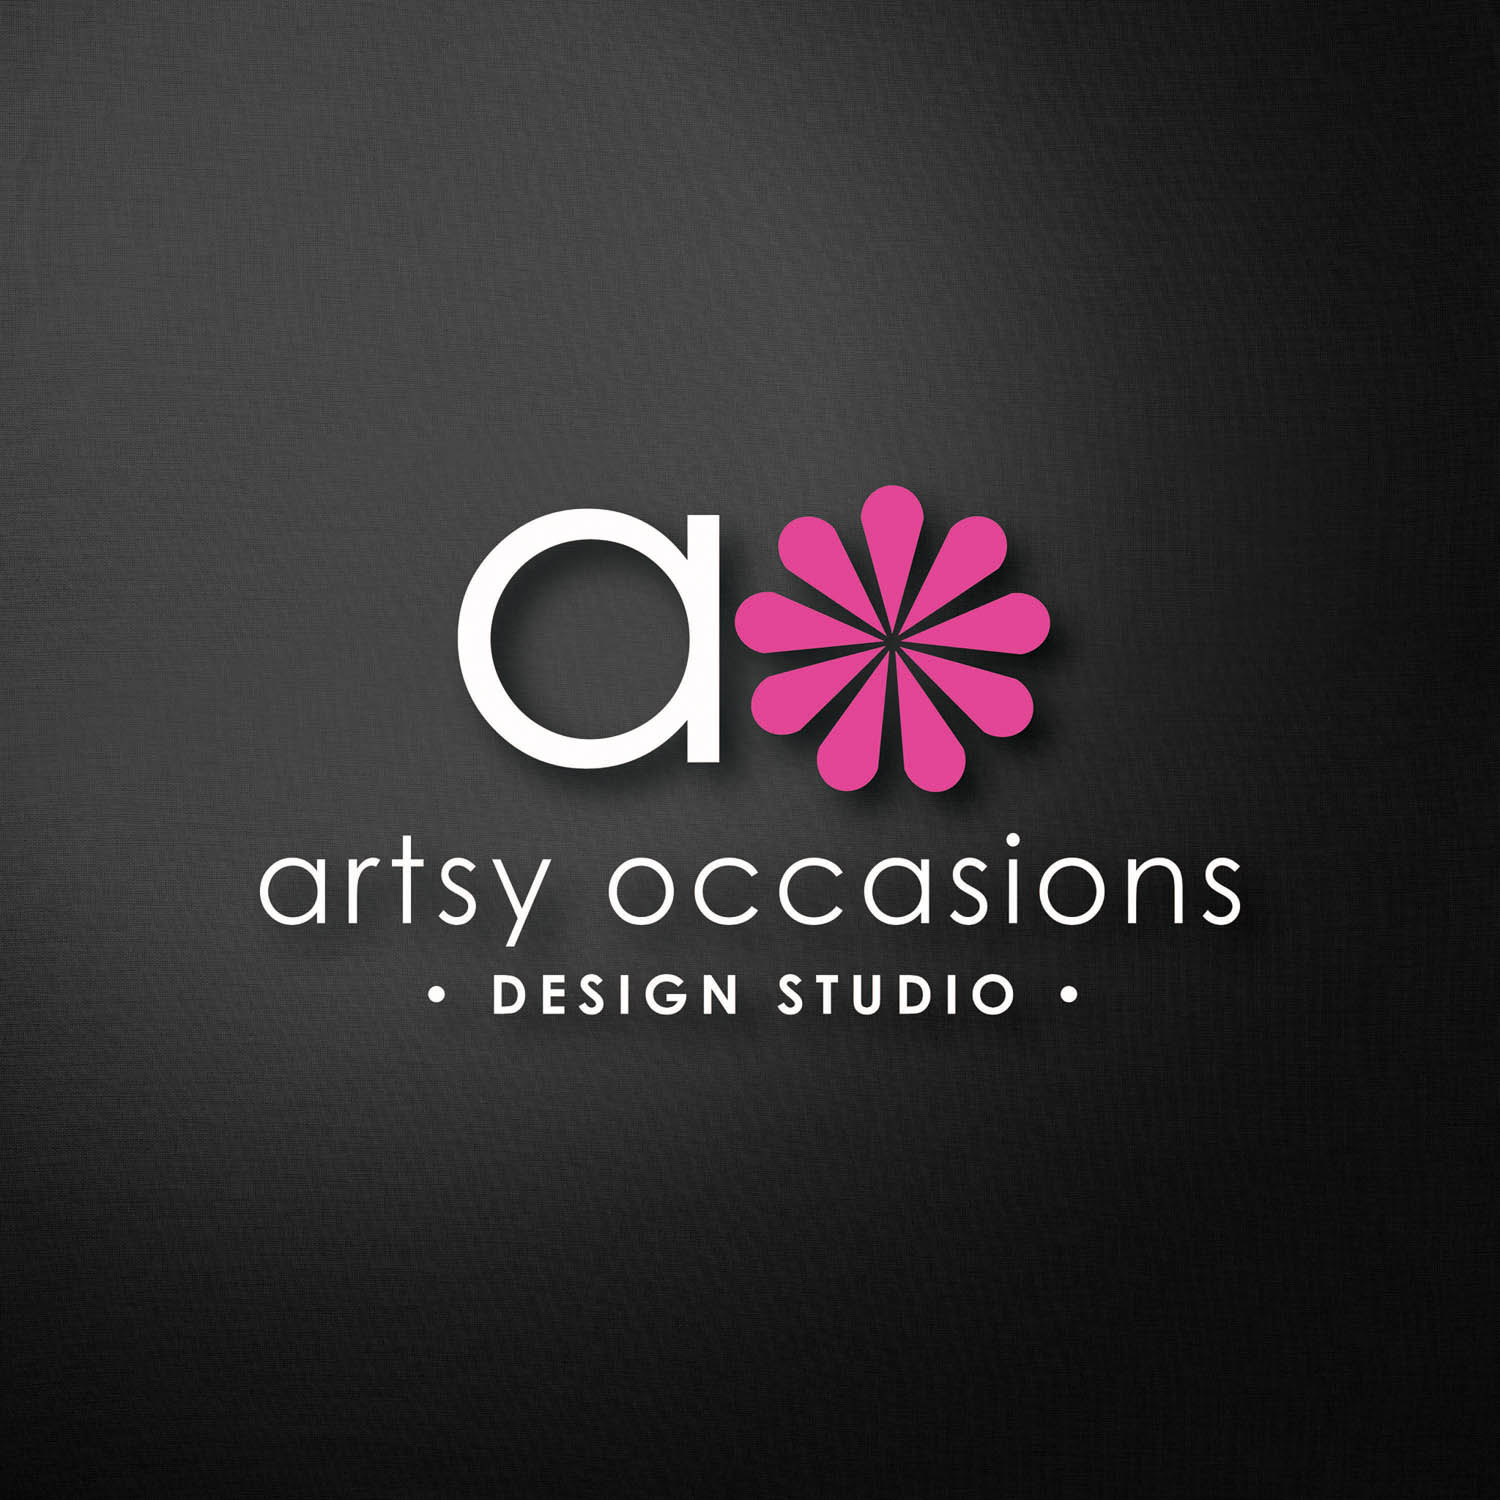 16 - artsy occasions logo 2.jpg